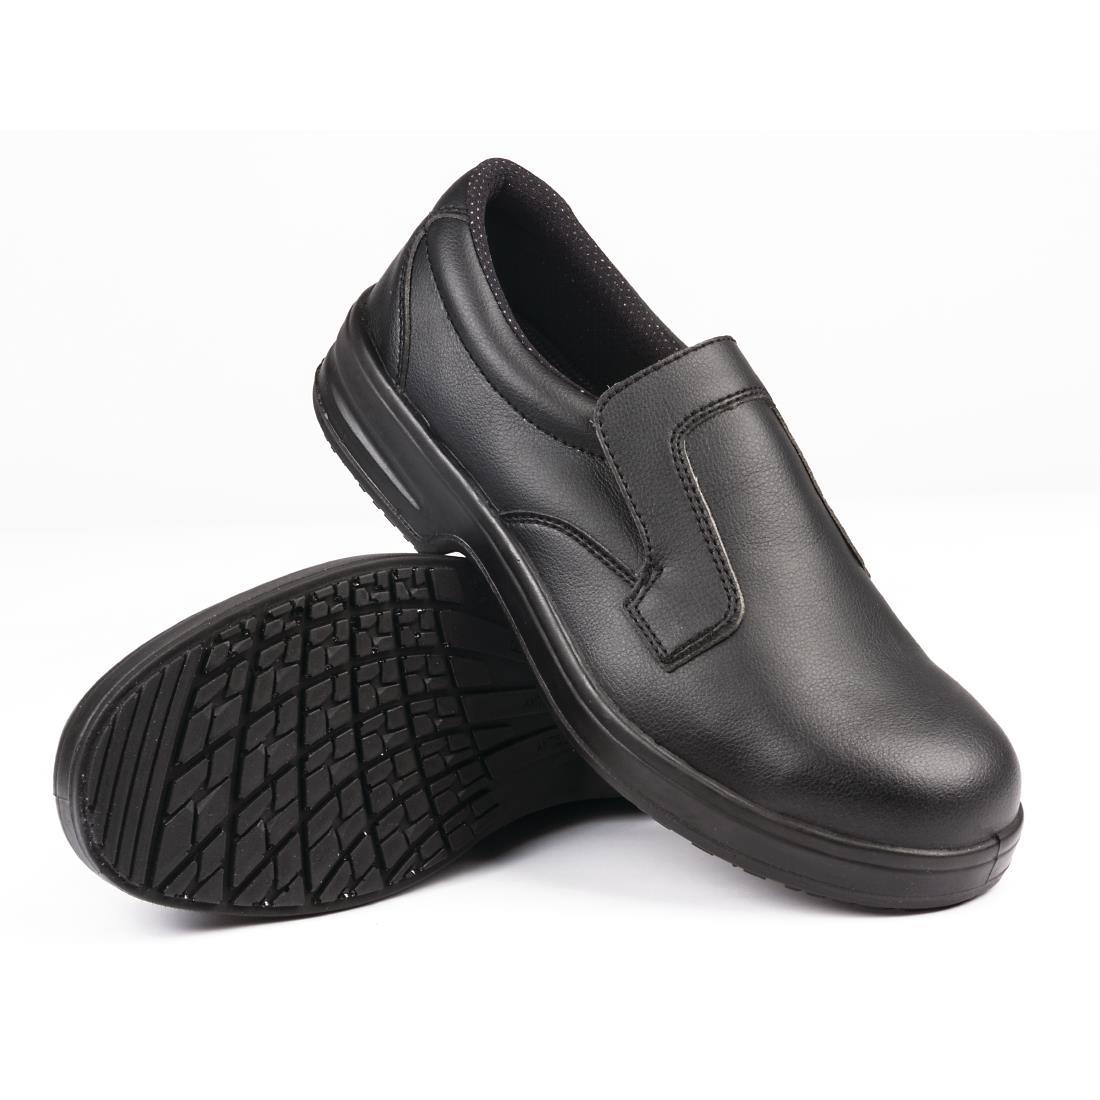 Slipbuster Lite Slip On Safety Shoes Black 37 - A845-37  - 3